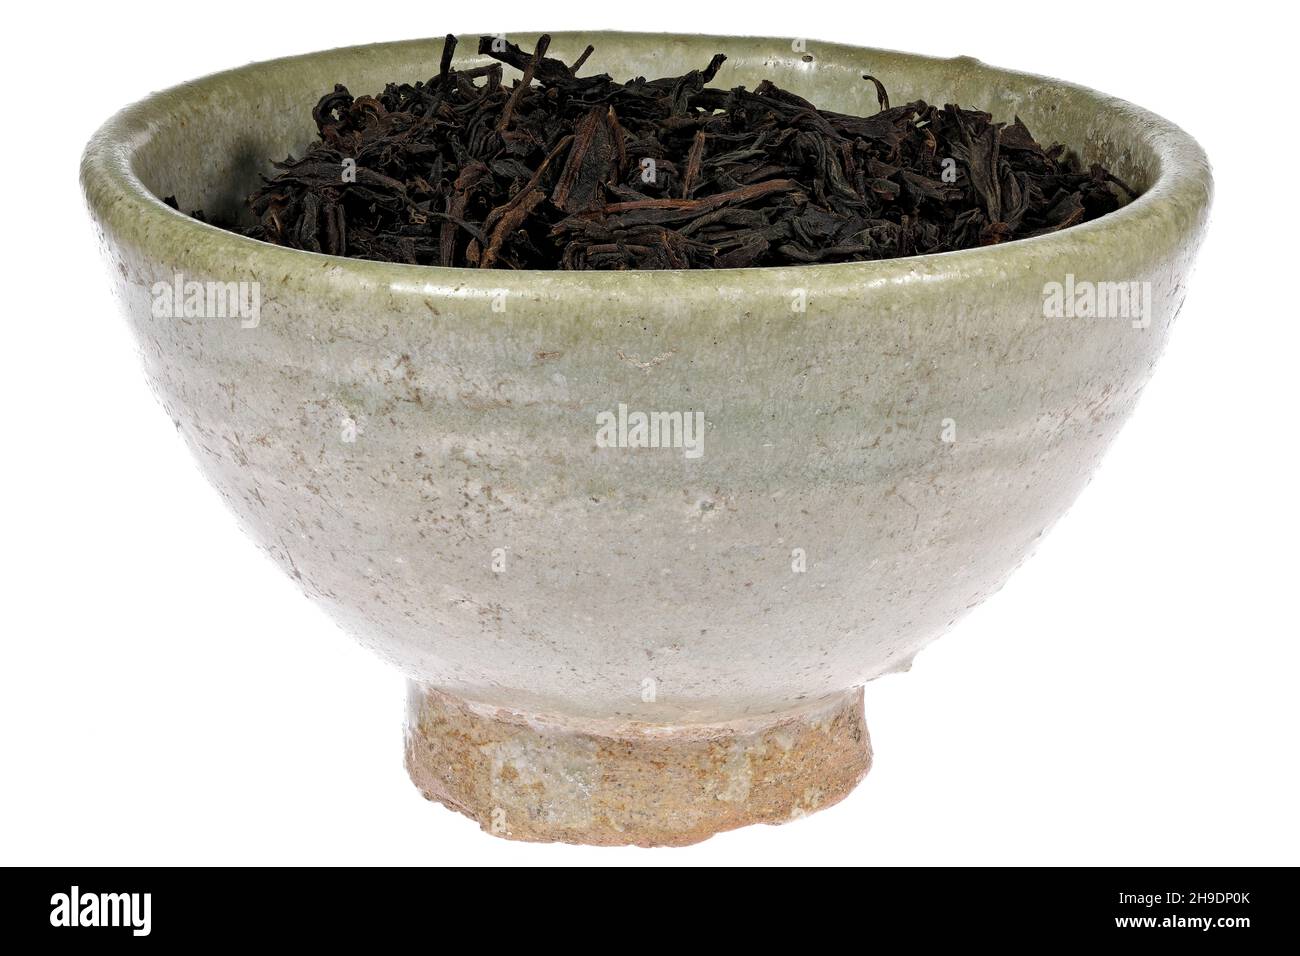 Ceylon Black Tea in a vintage earthenware bowl isolated on white background Stock Photo